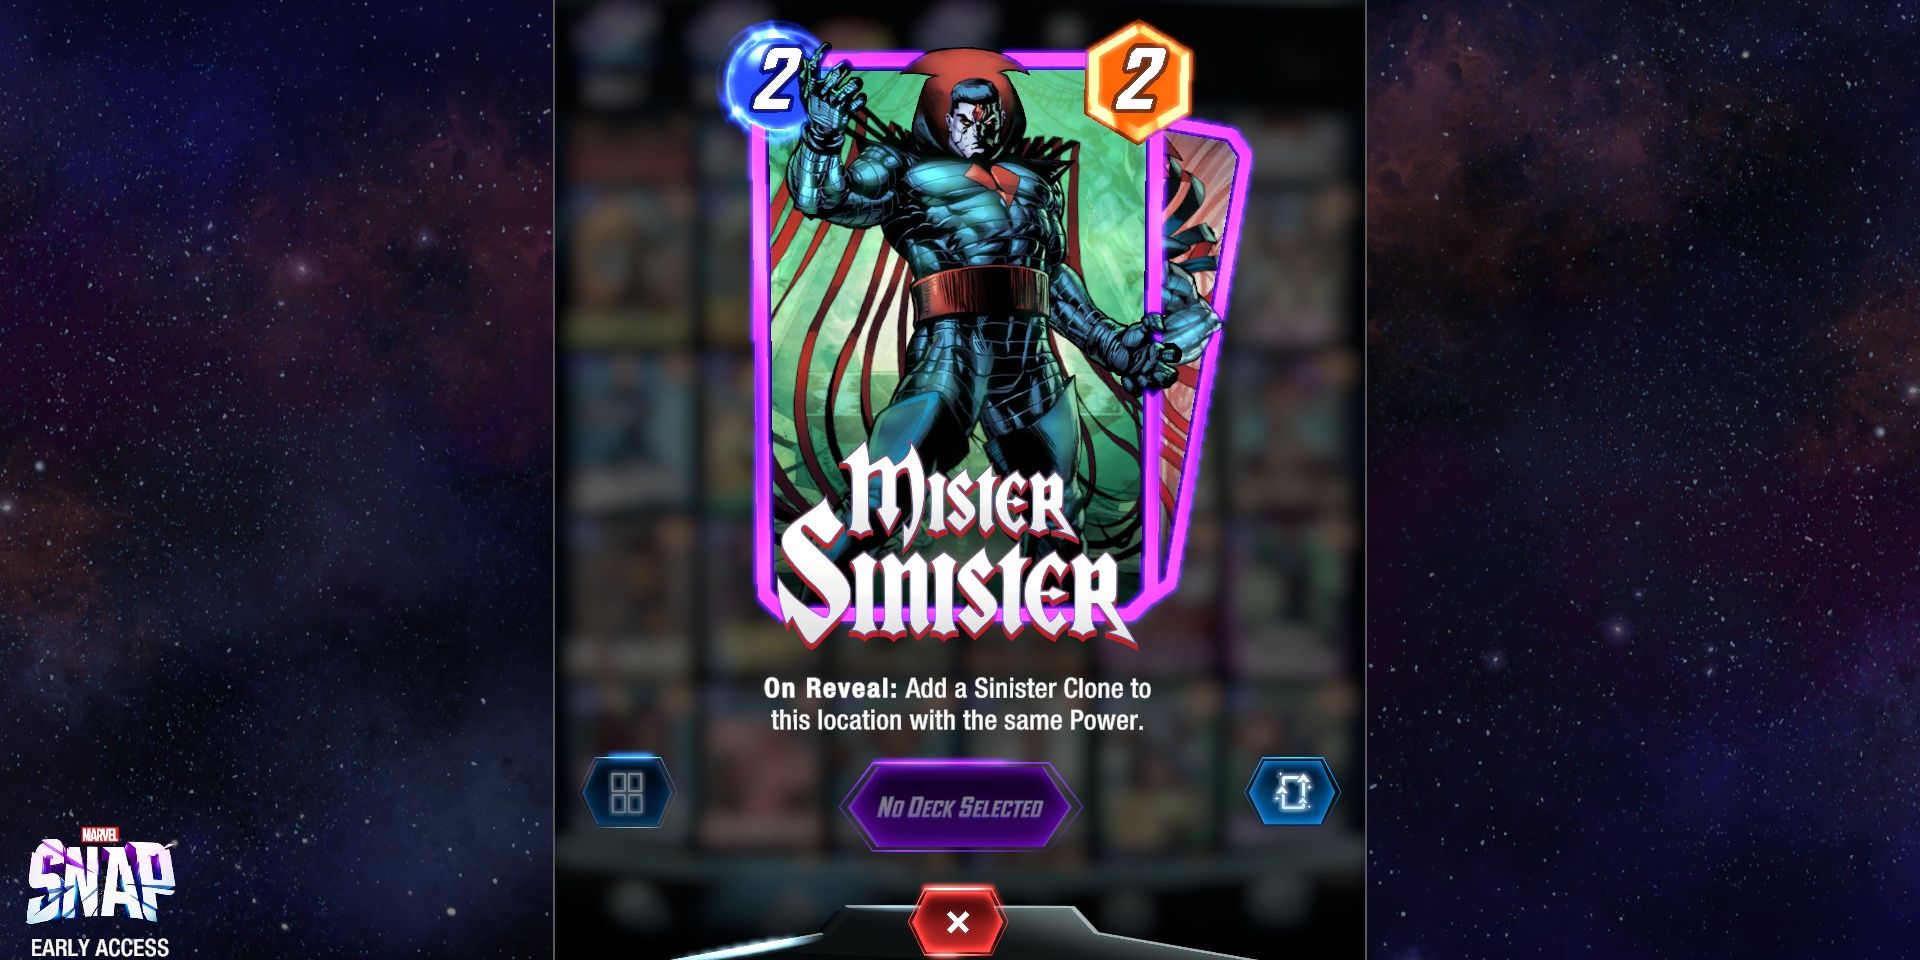 Mister Sinister's Card in Marvel Snap.